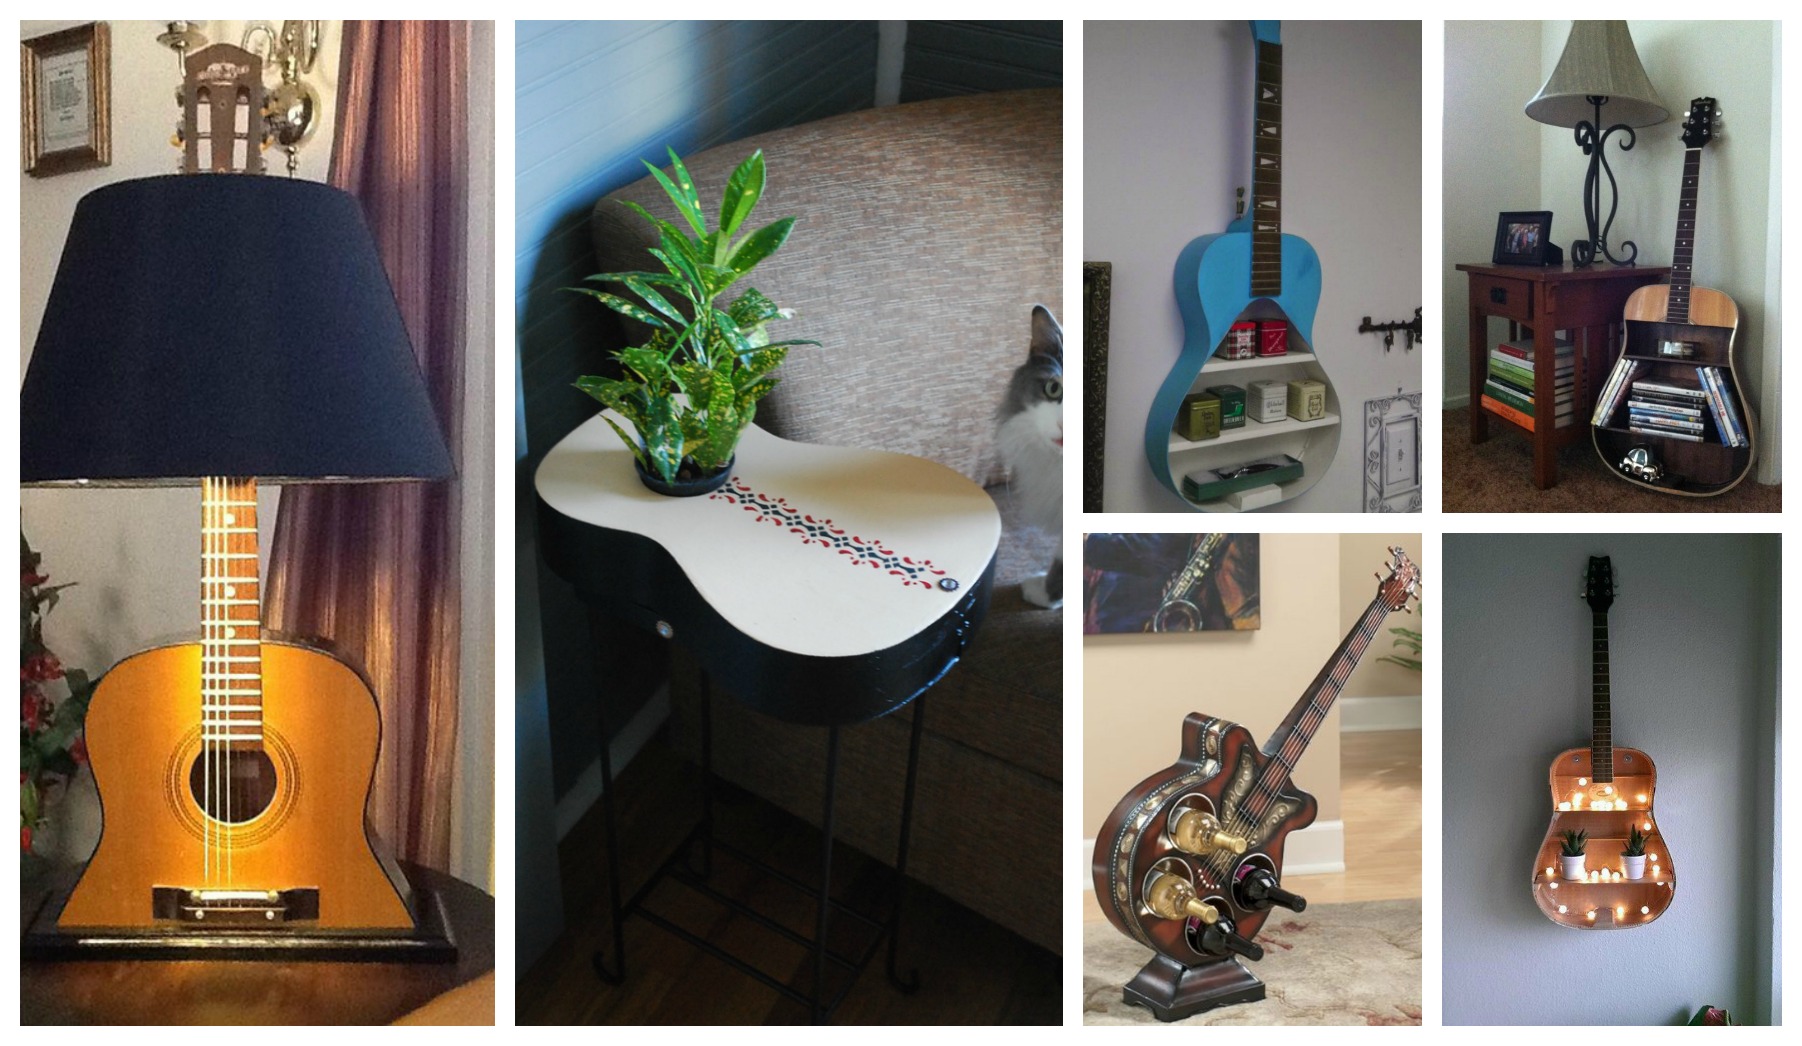 How To Repurpose Guitars In Home Decor